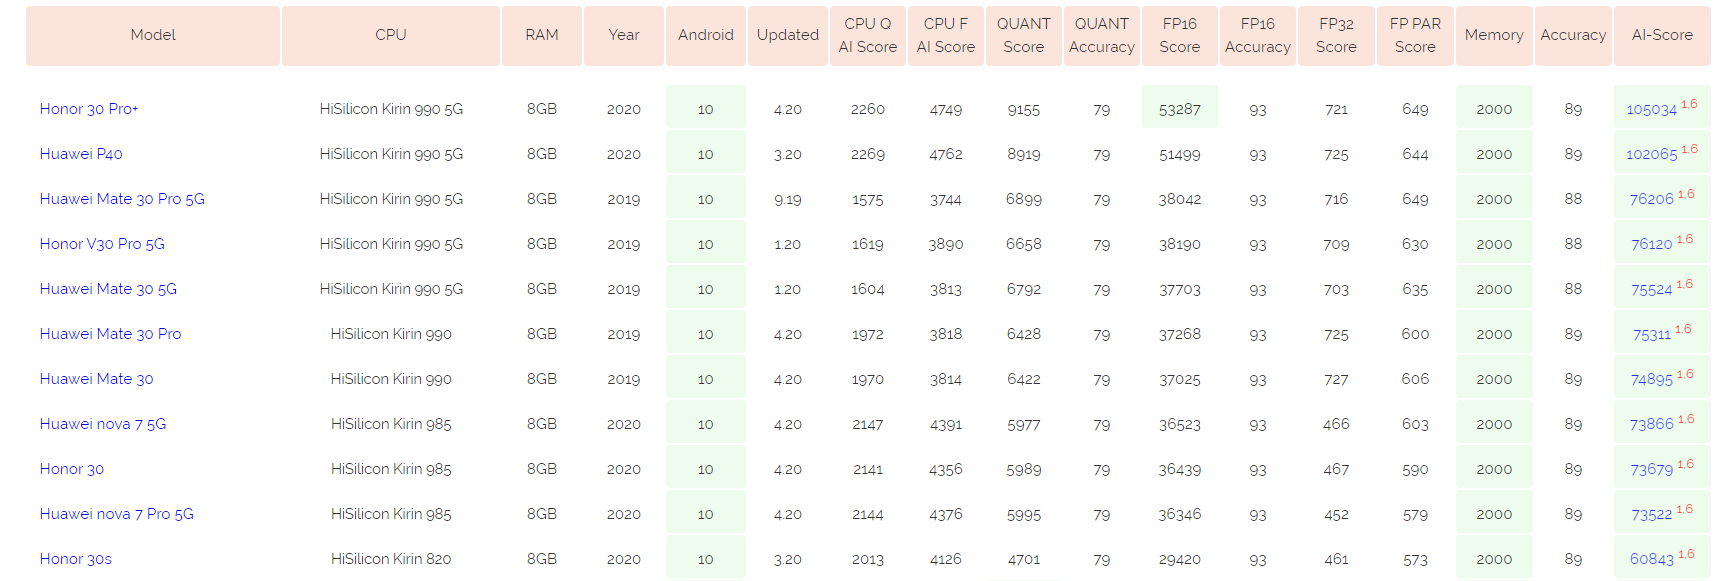 Huawei AI Benchmark Performance Ranking